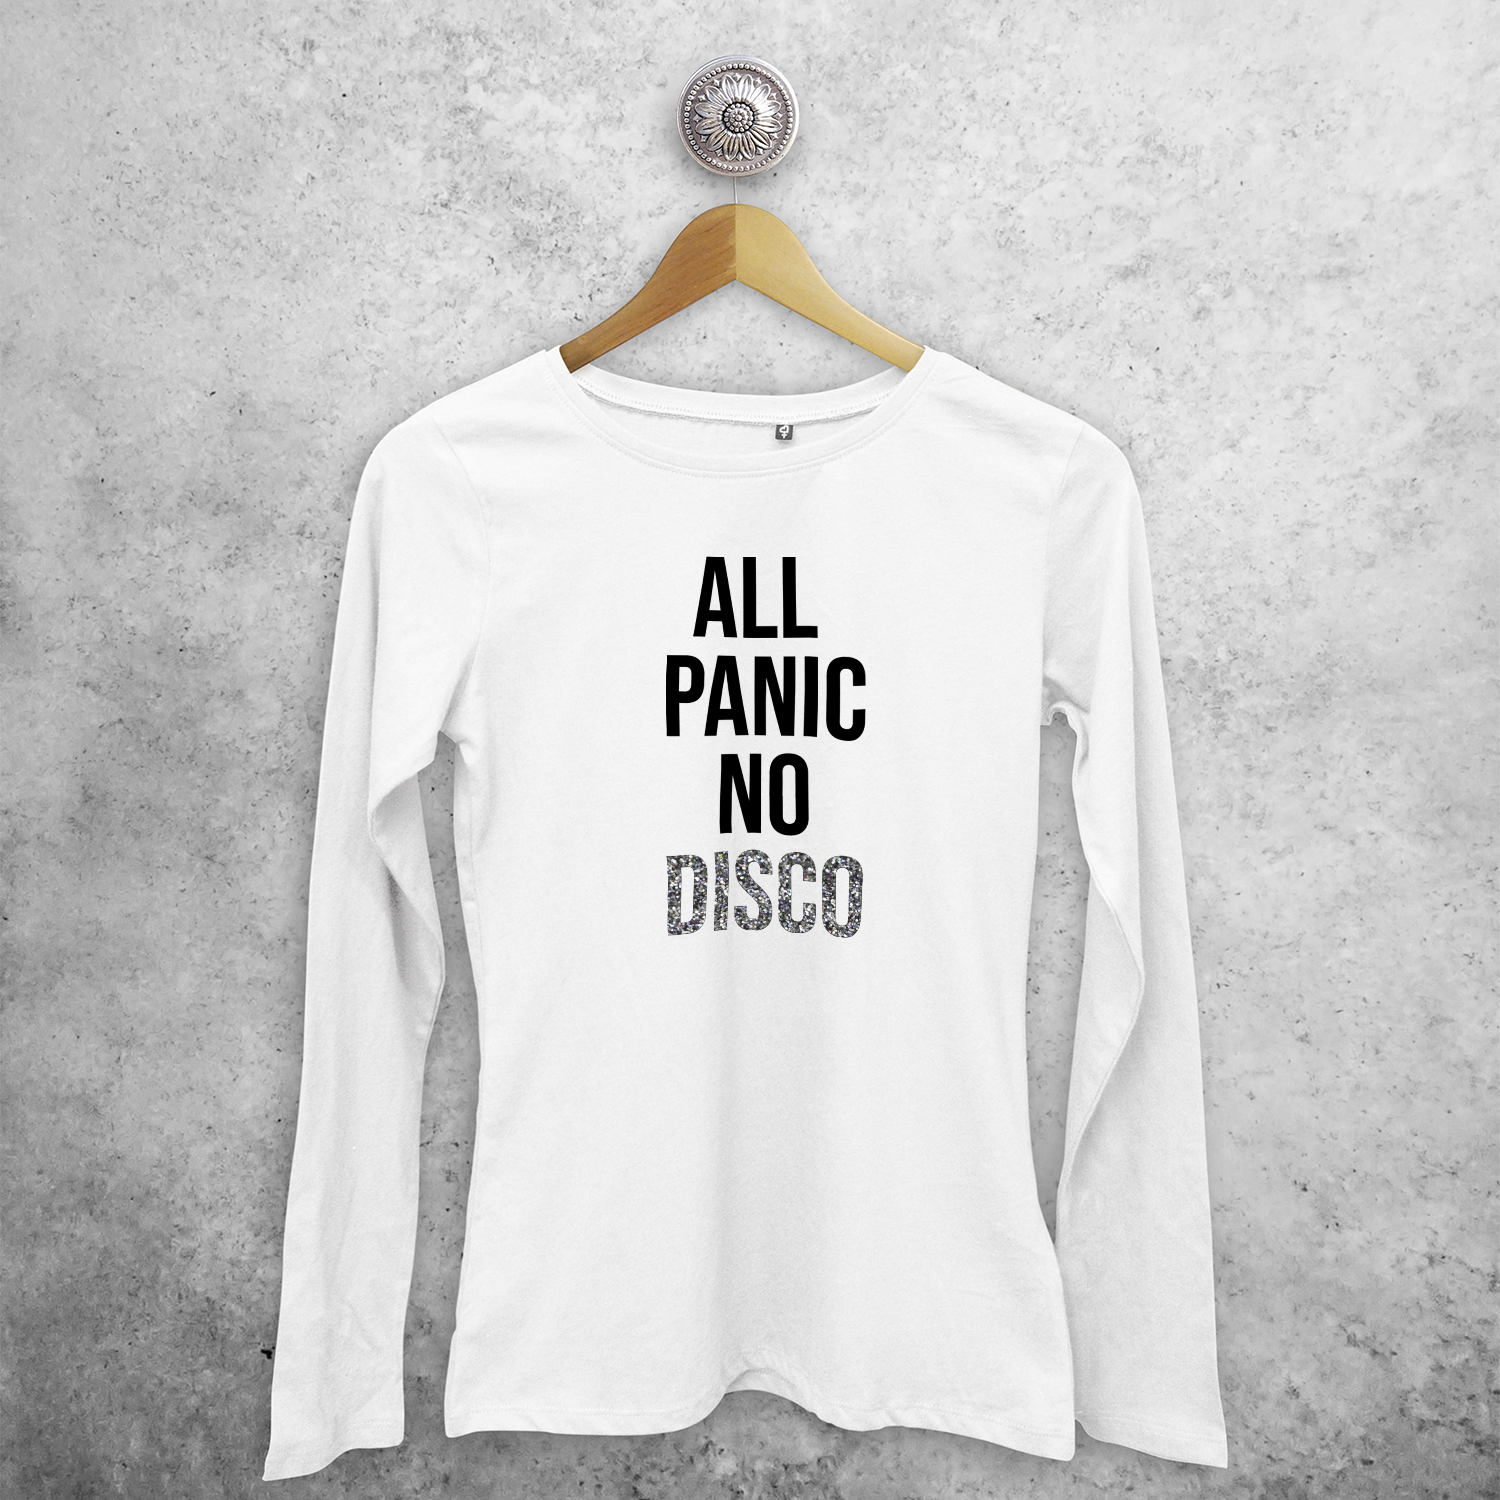 'All panic, no disco' volwassene shirt met lange mouwen